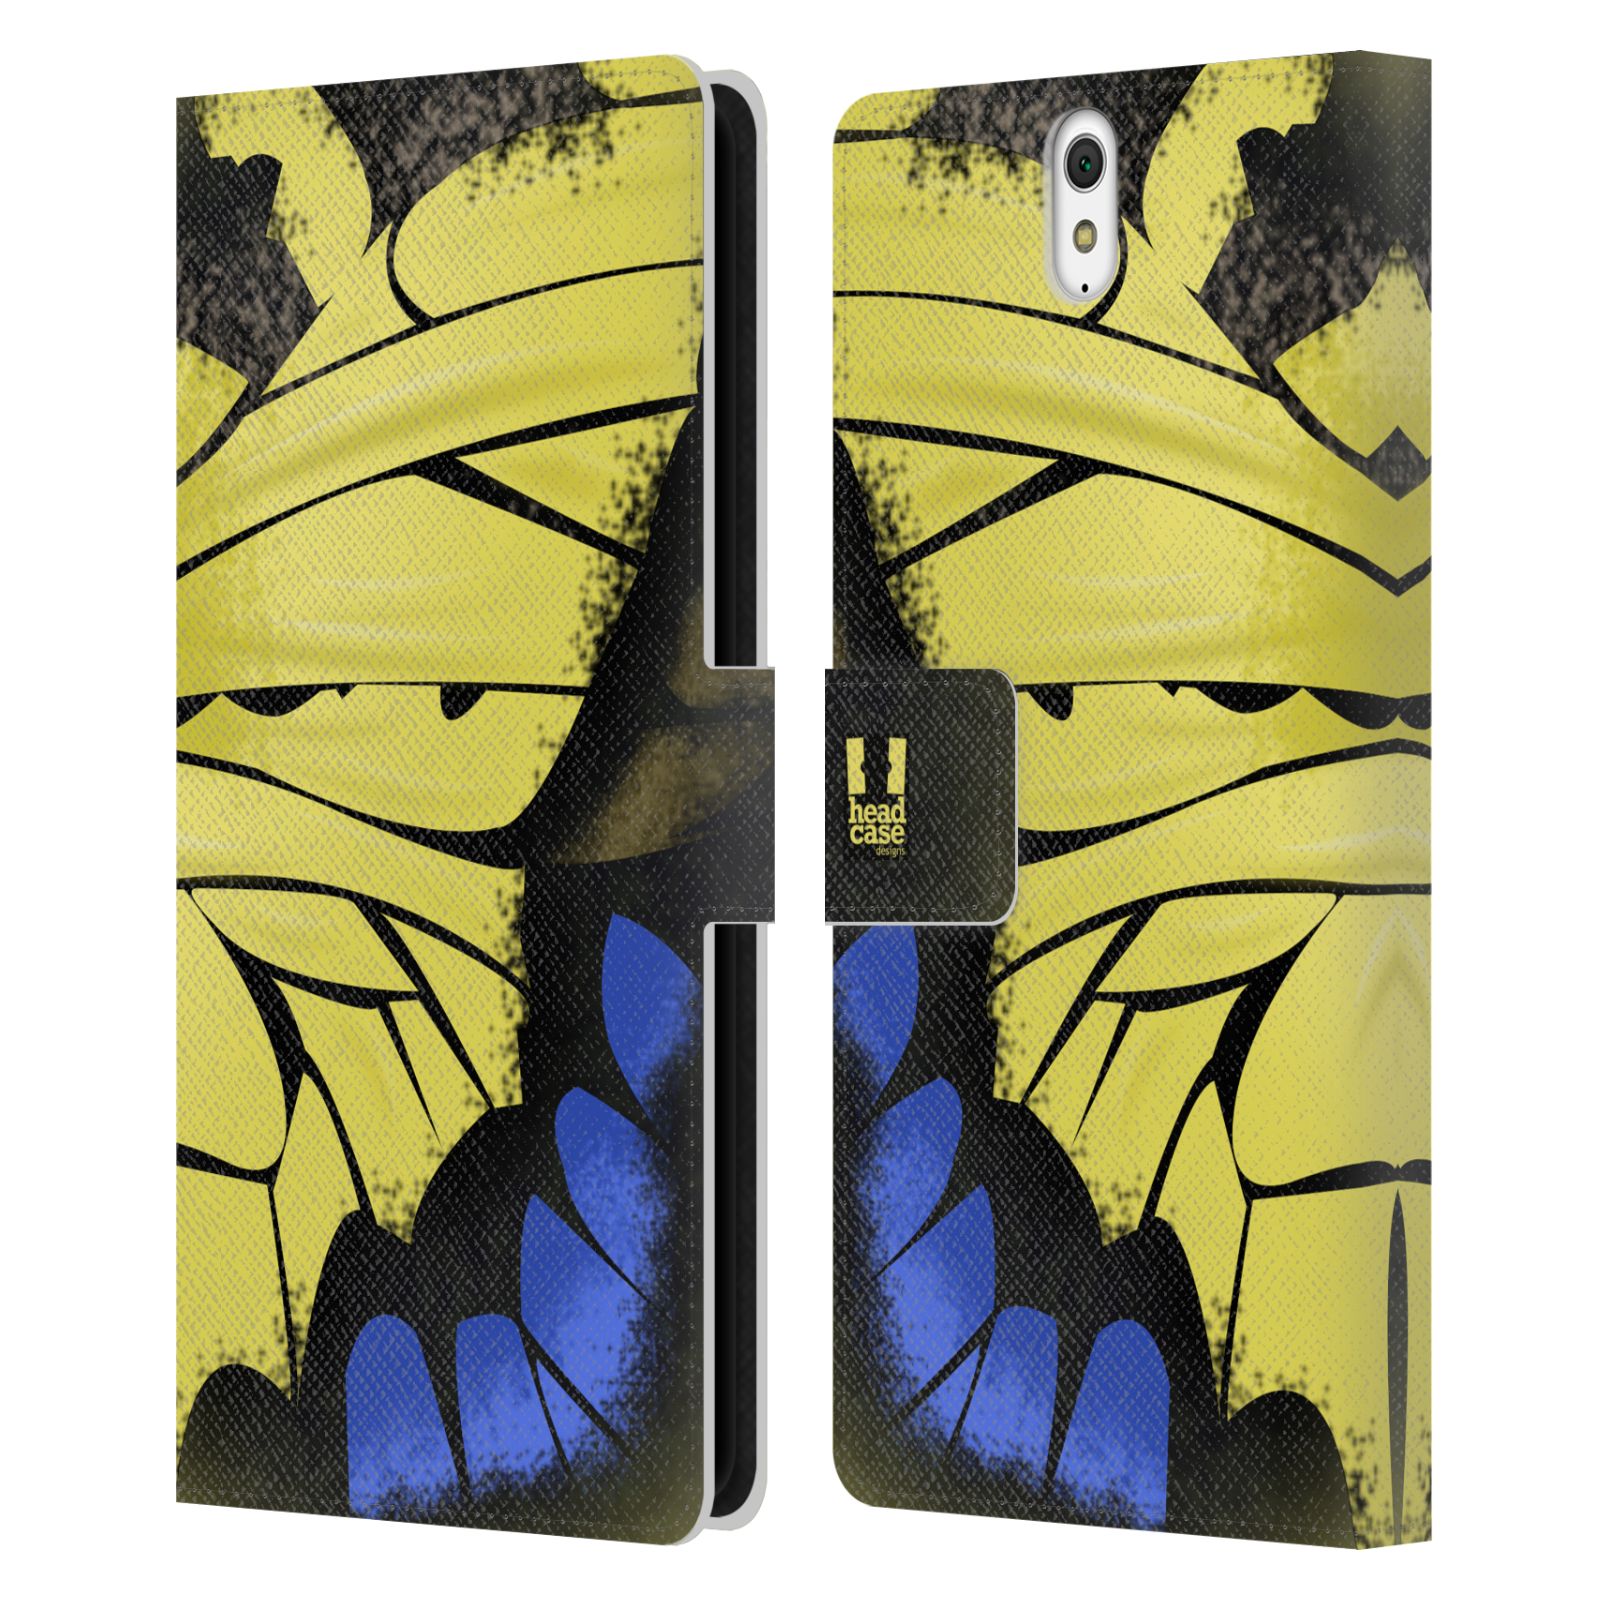 HEAD CASE Flipové pouzdro pro mobil SONY XPERIA C5 Ultra motýl a křídla kreslený vzor žlutá a modrá